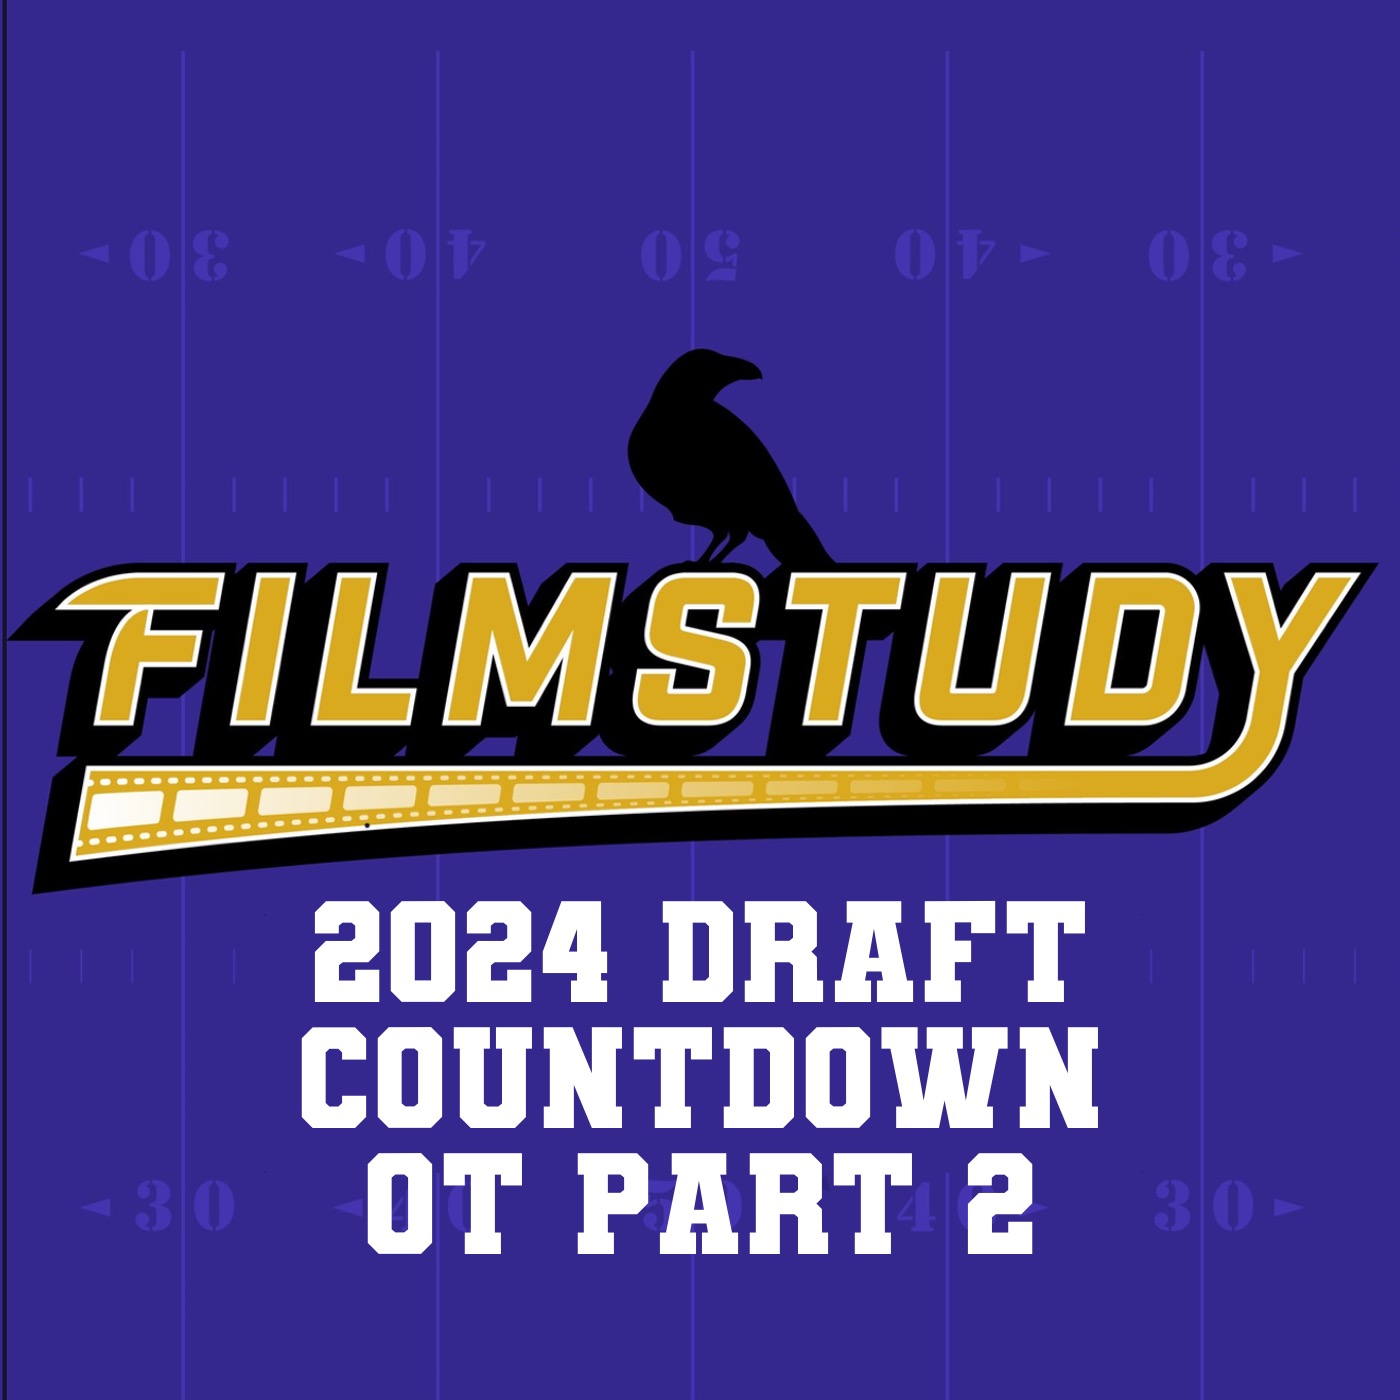 2024 Draft Countdown OT Part 2